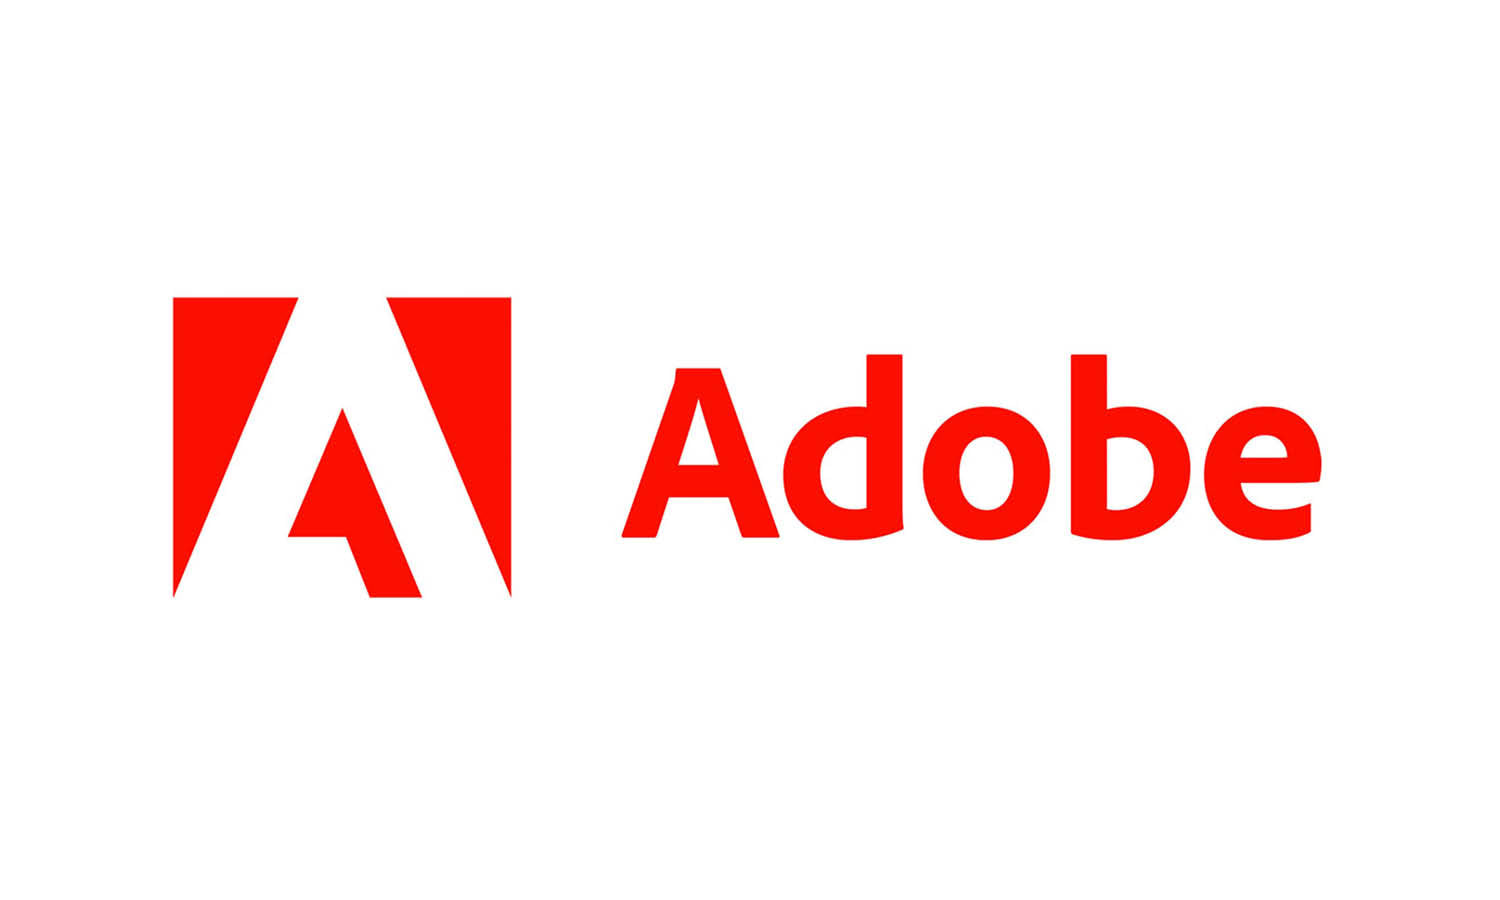 Adobe Logo Design: History & Evolution